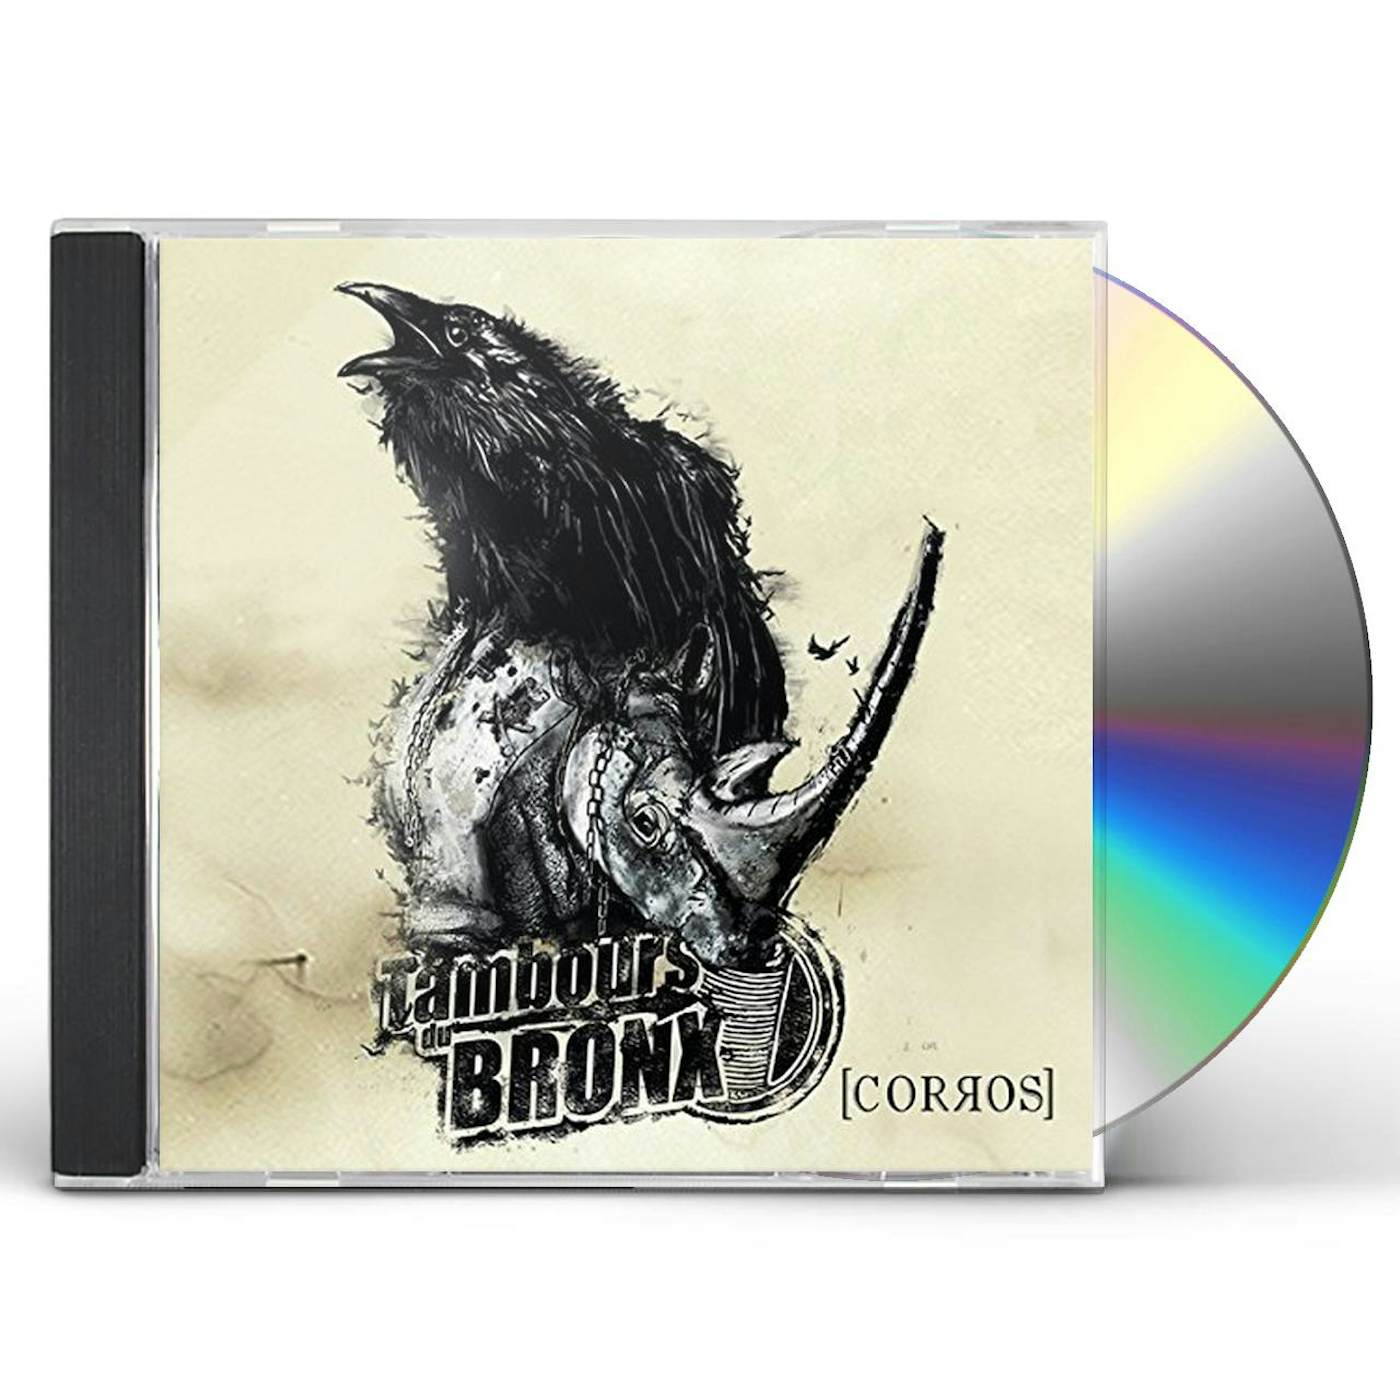 Les Tambours du Bronx CORROS CD